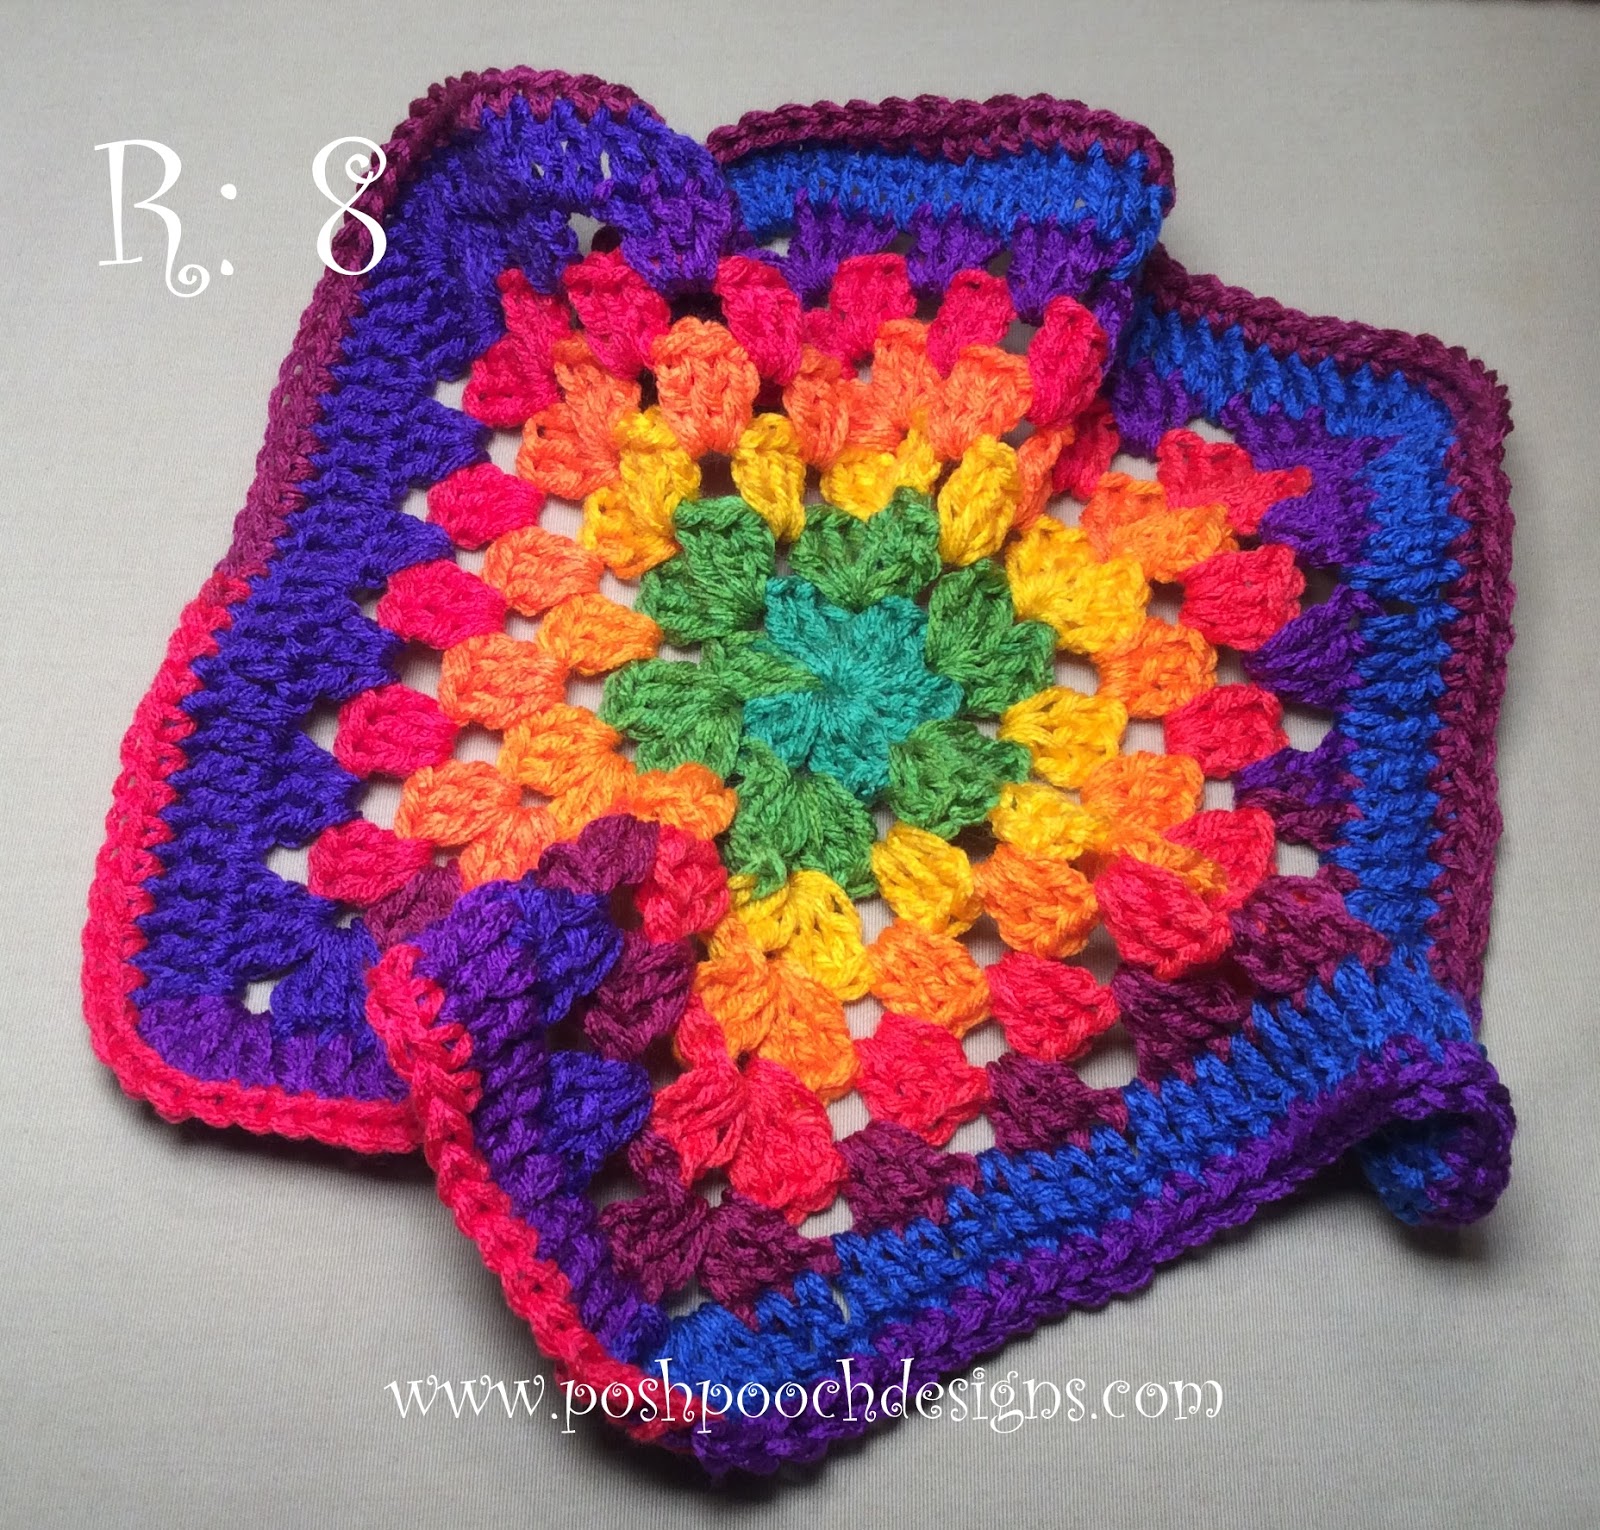 Posh Pooch Designs : Rainbow Baby Bunny Lovie Crochet Pattern | Posh ...